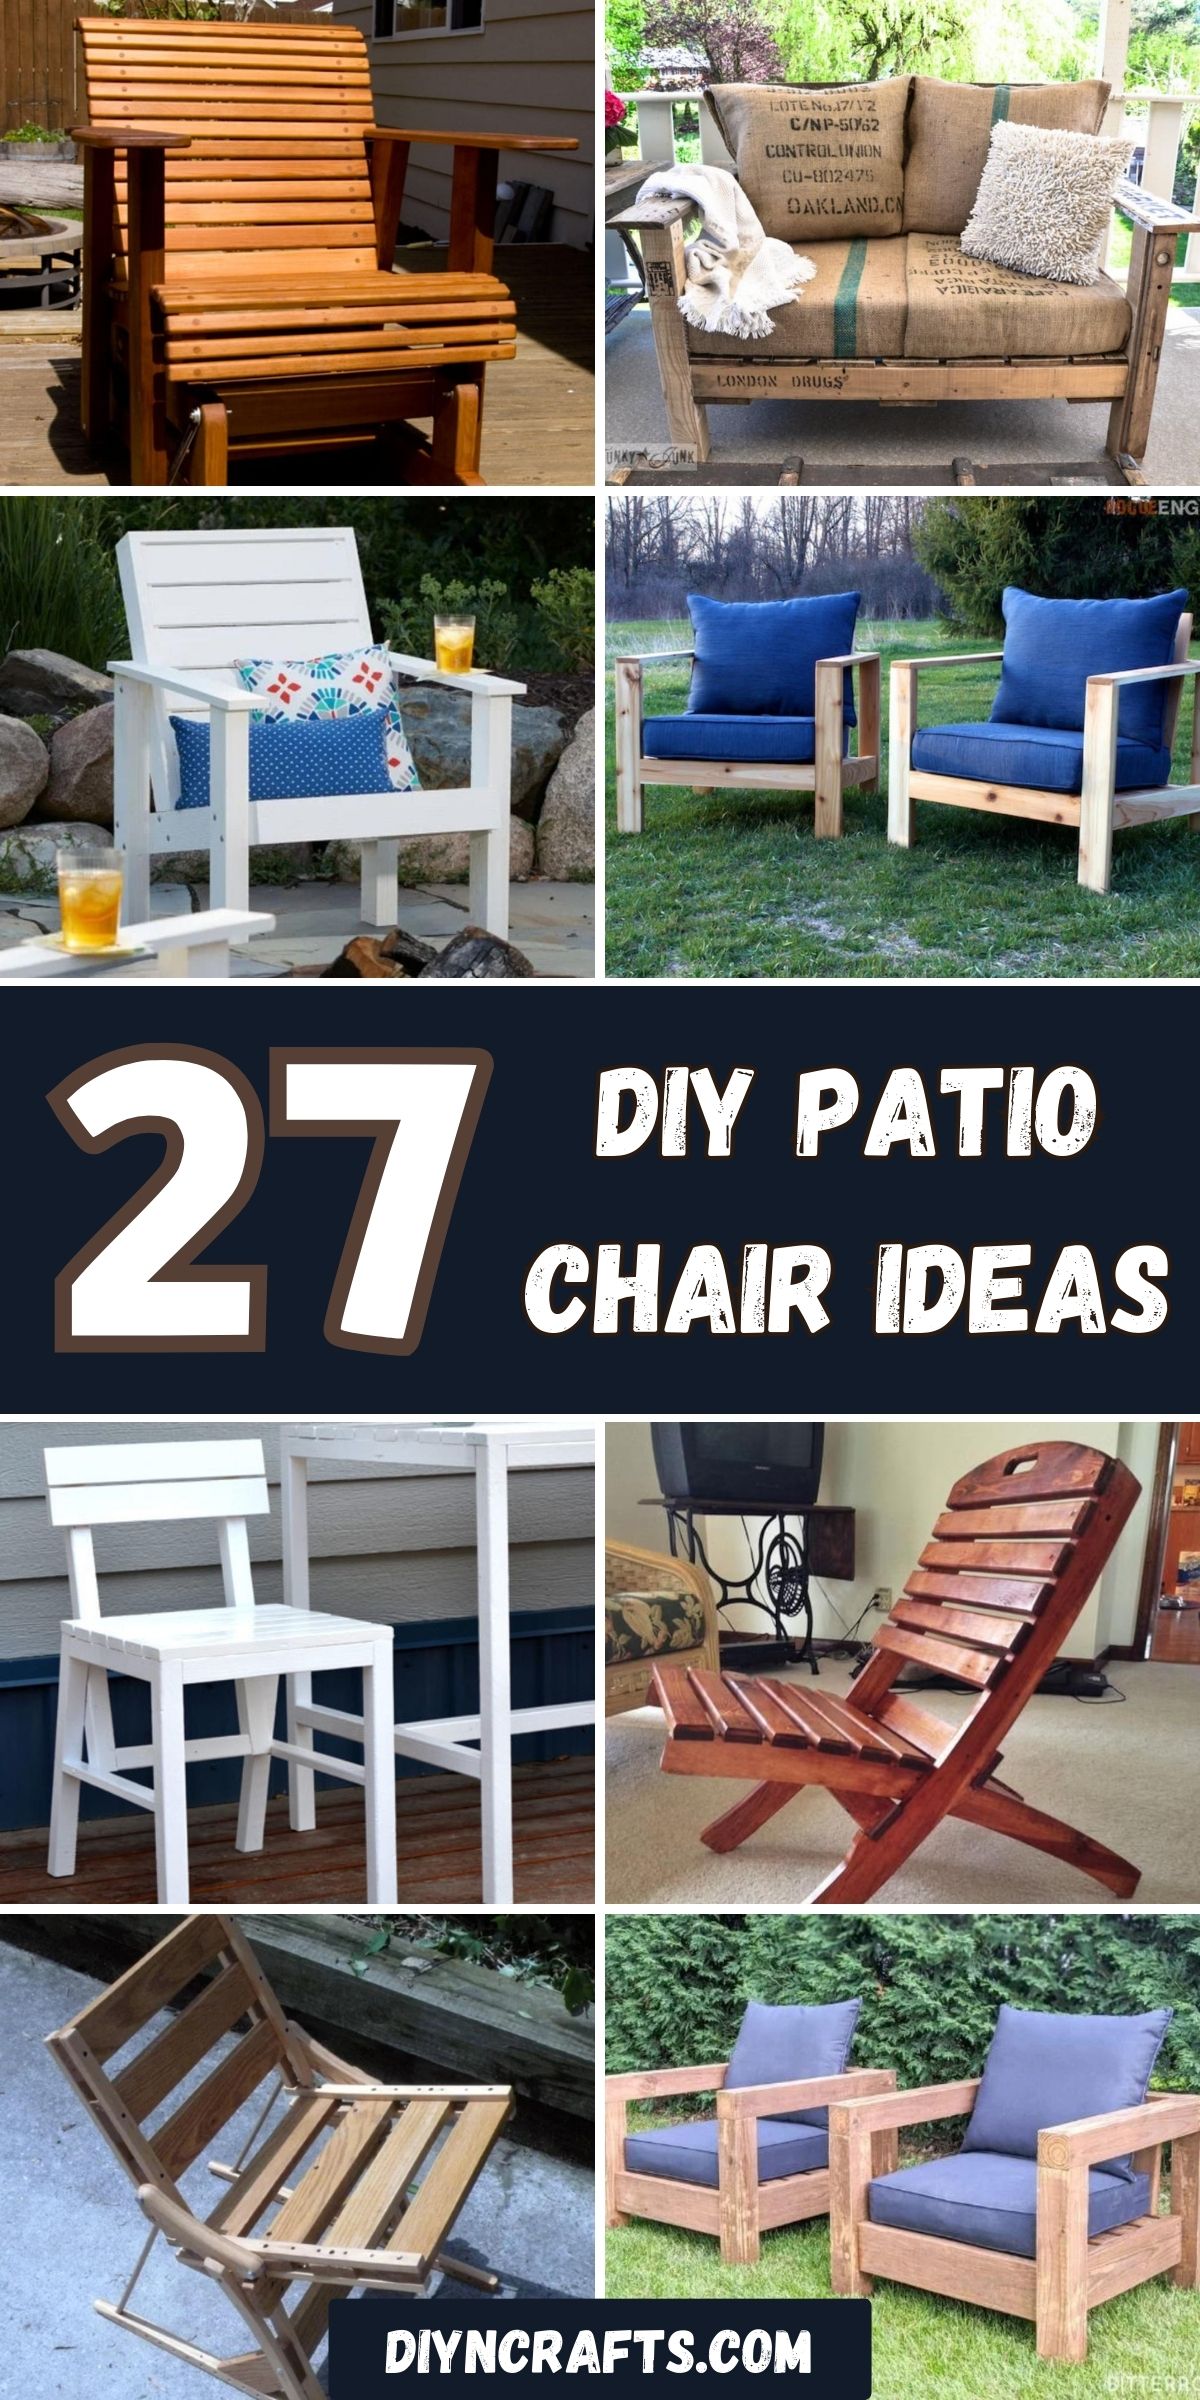 27 DIY Patio Chair Ideas collage.